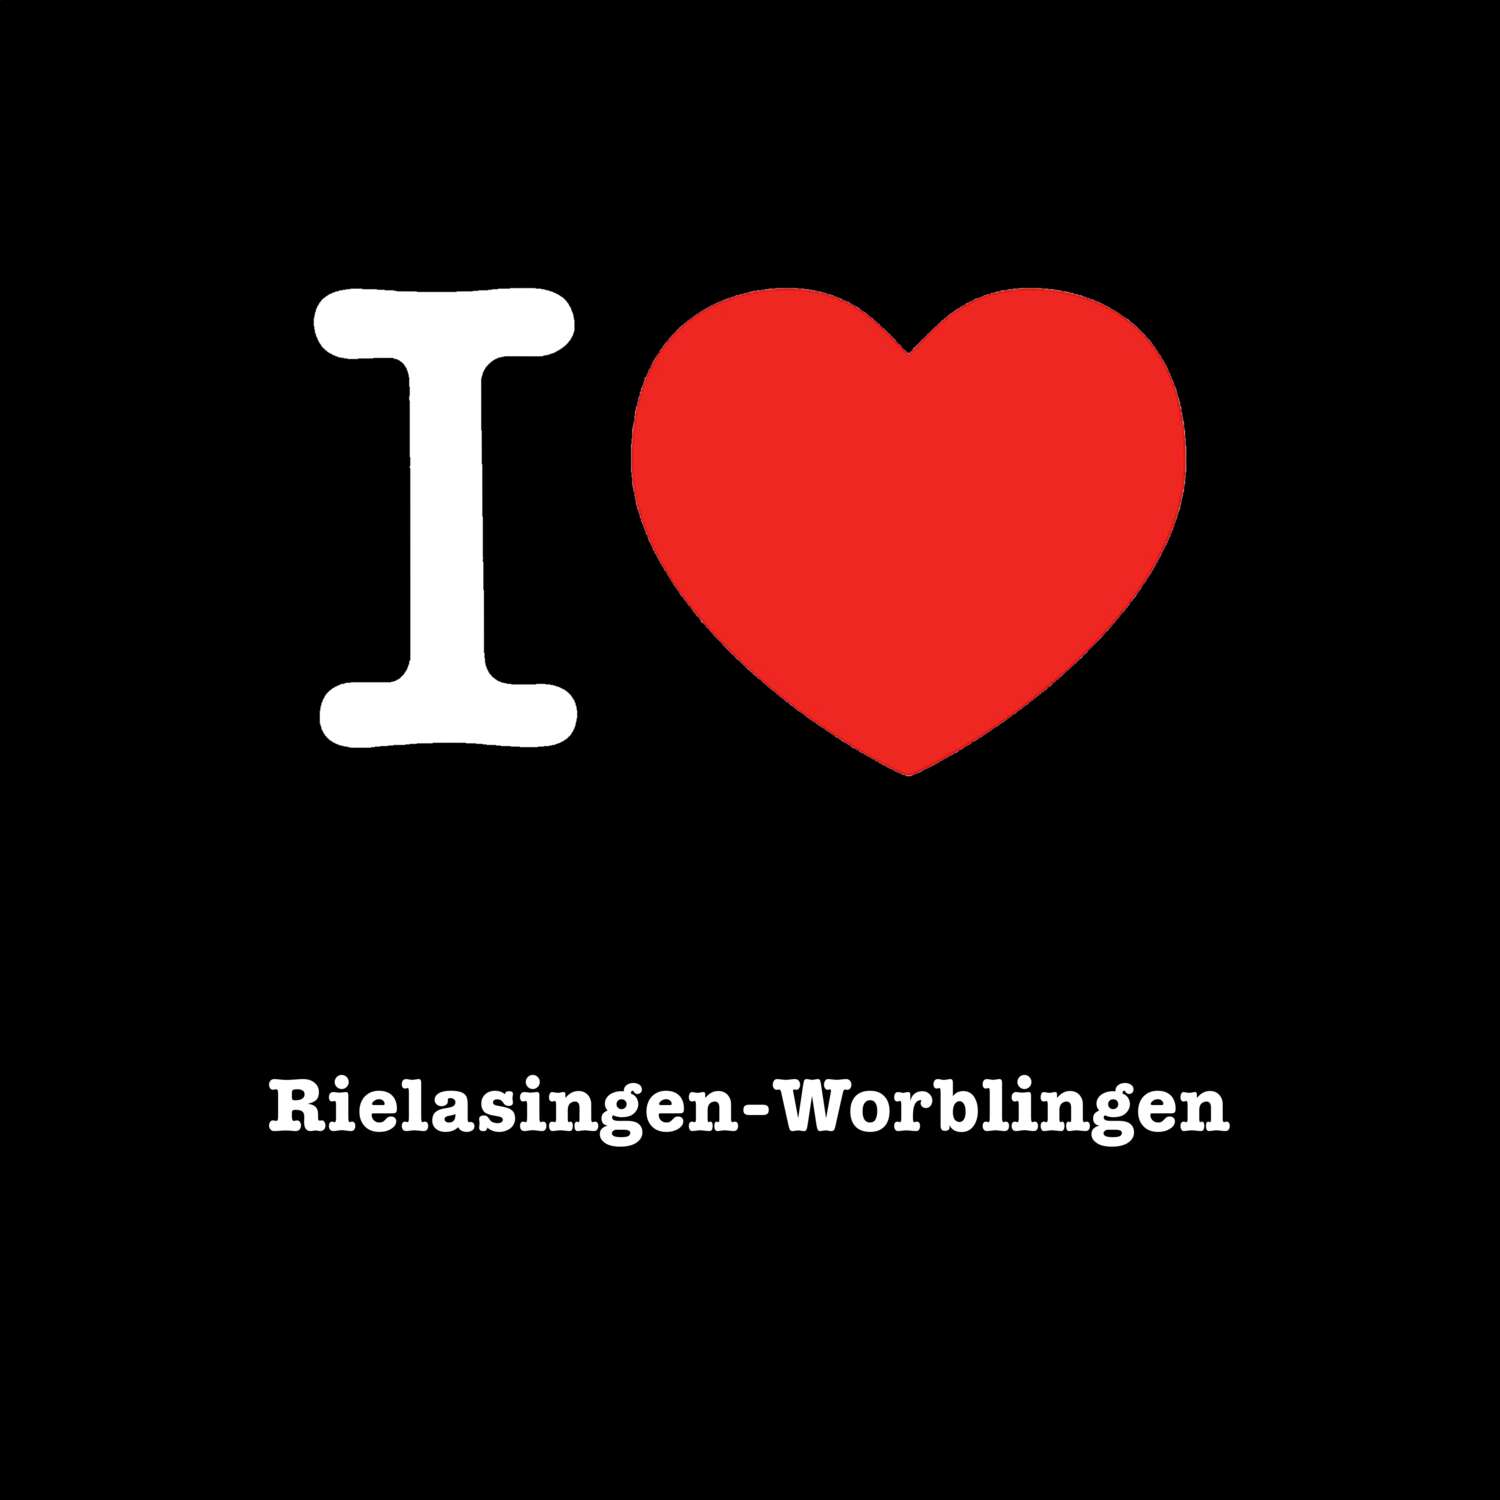 Rielasingen-Worblingen T-Shirt »I love«